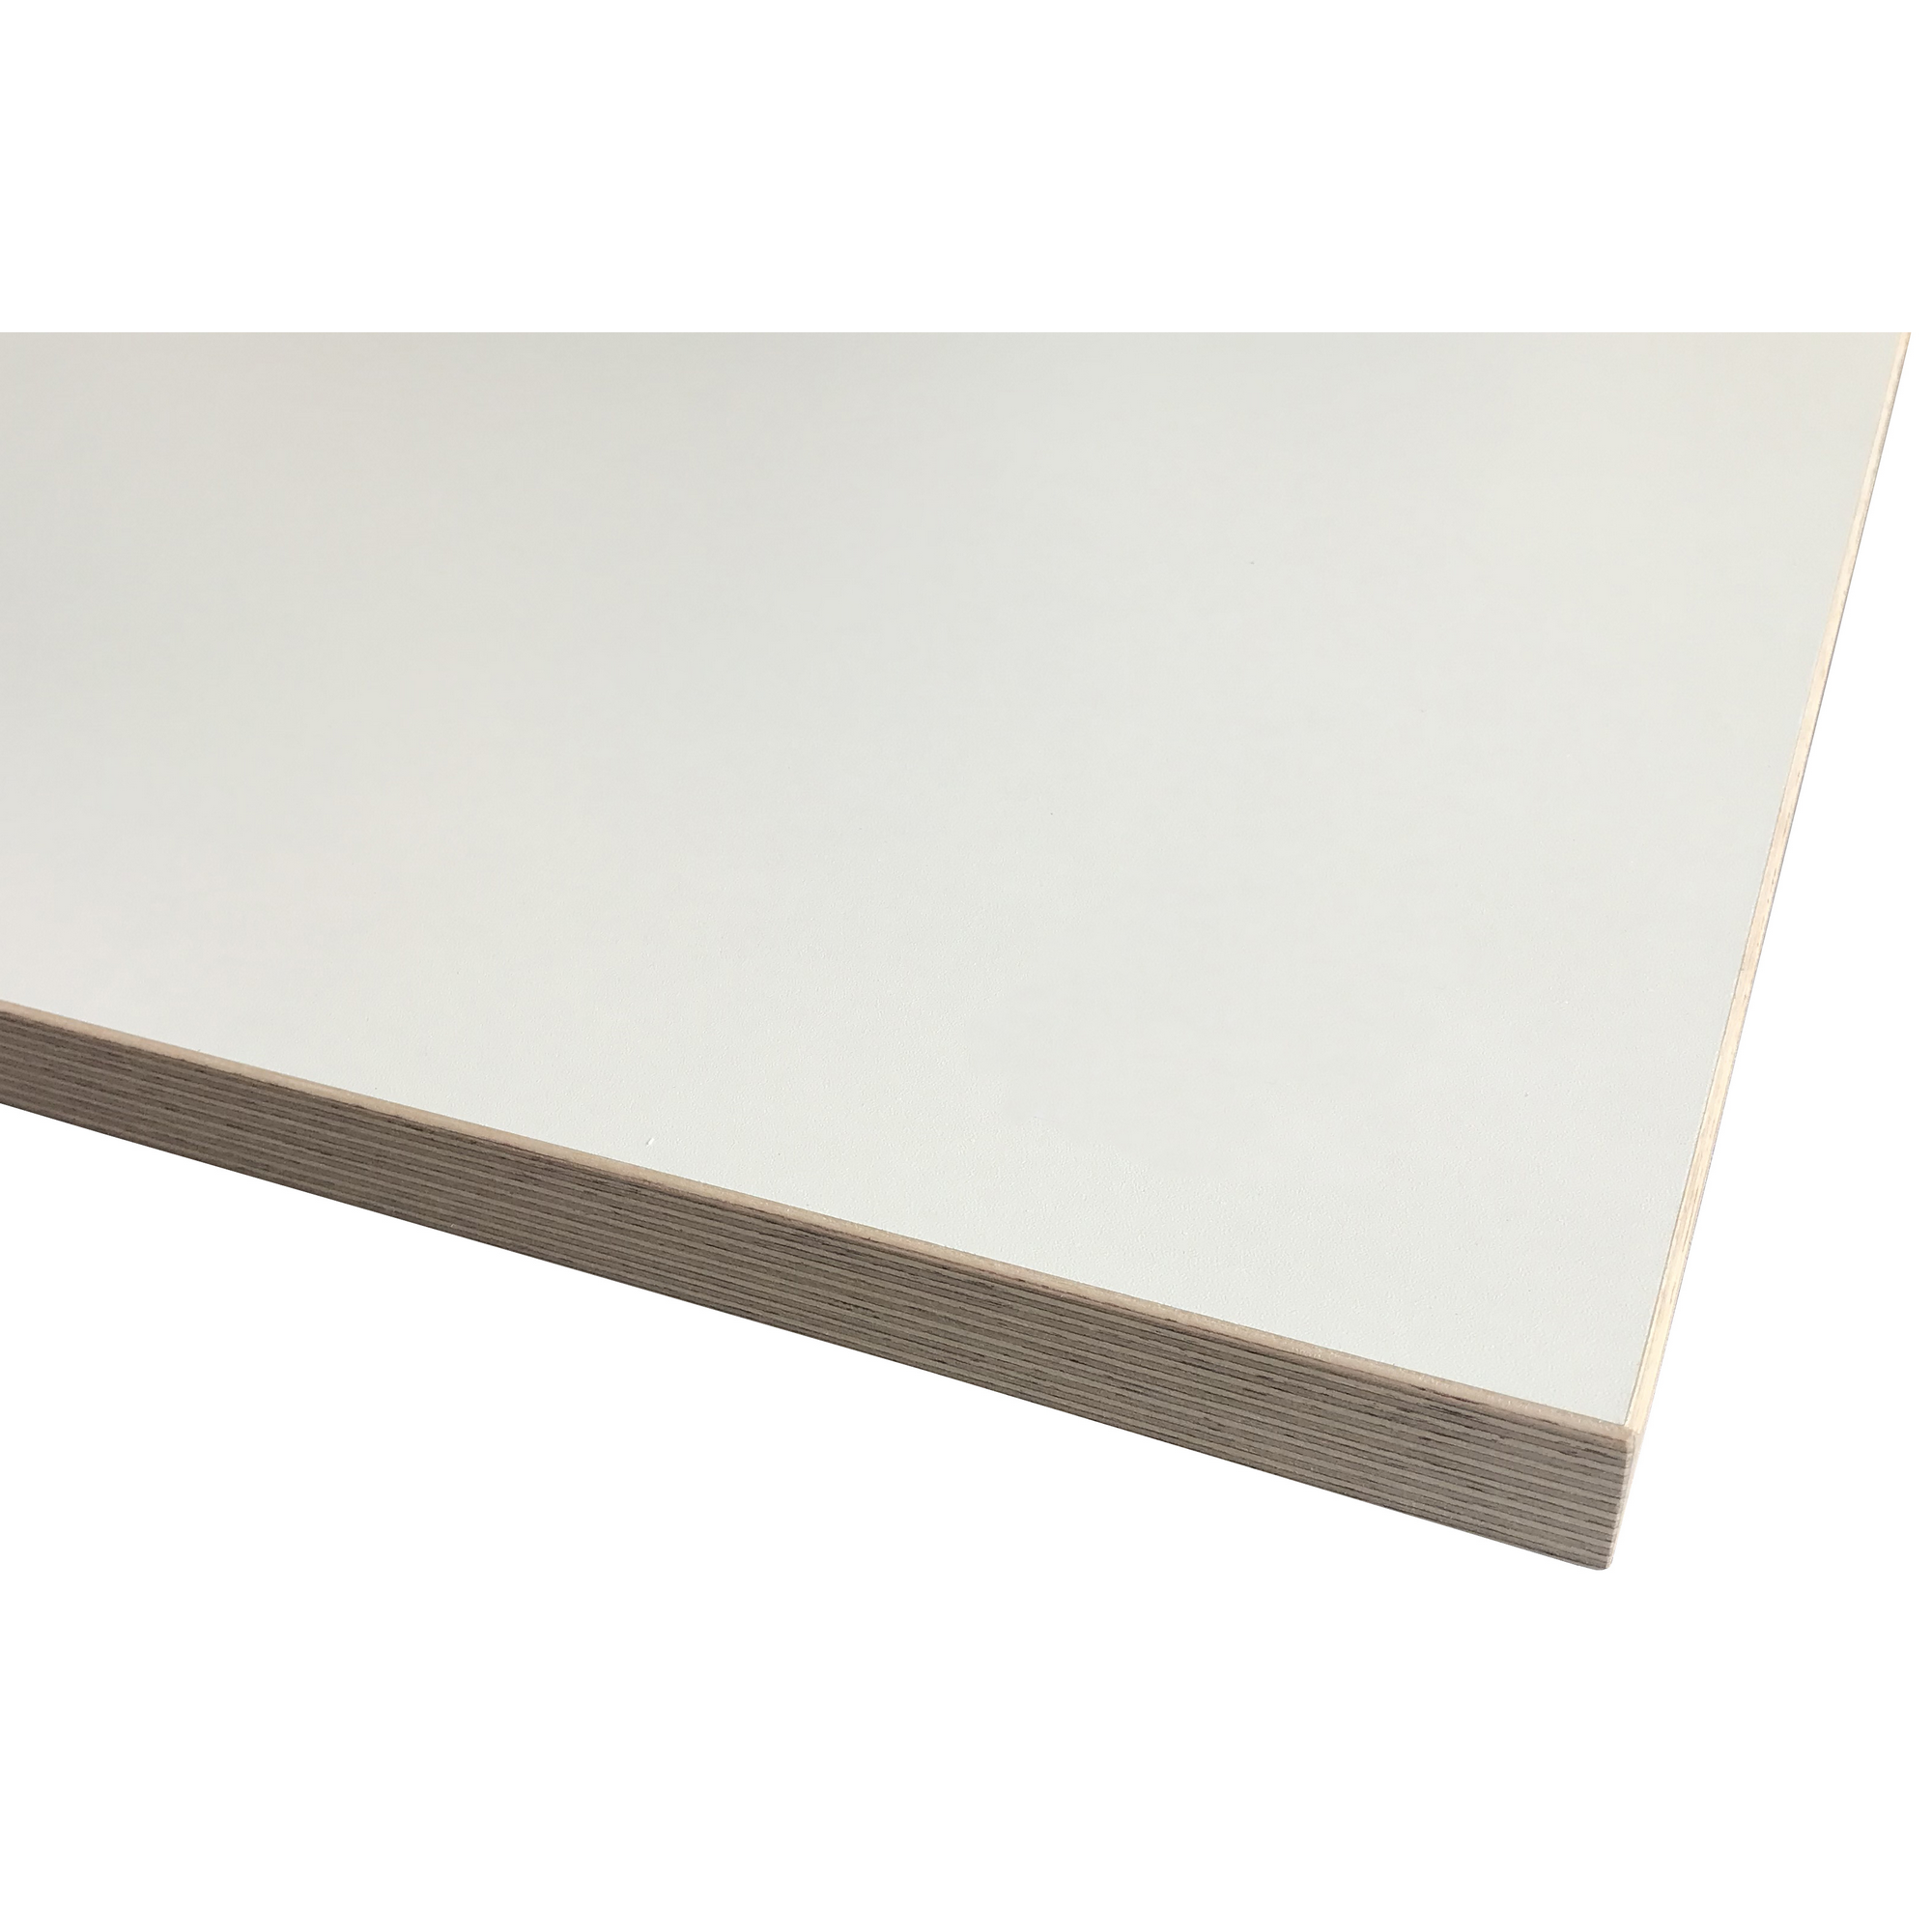 Tischplatte Dekorspan weiß 120 x 80 x 2,7 cm + product picture